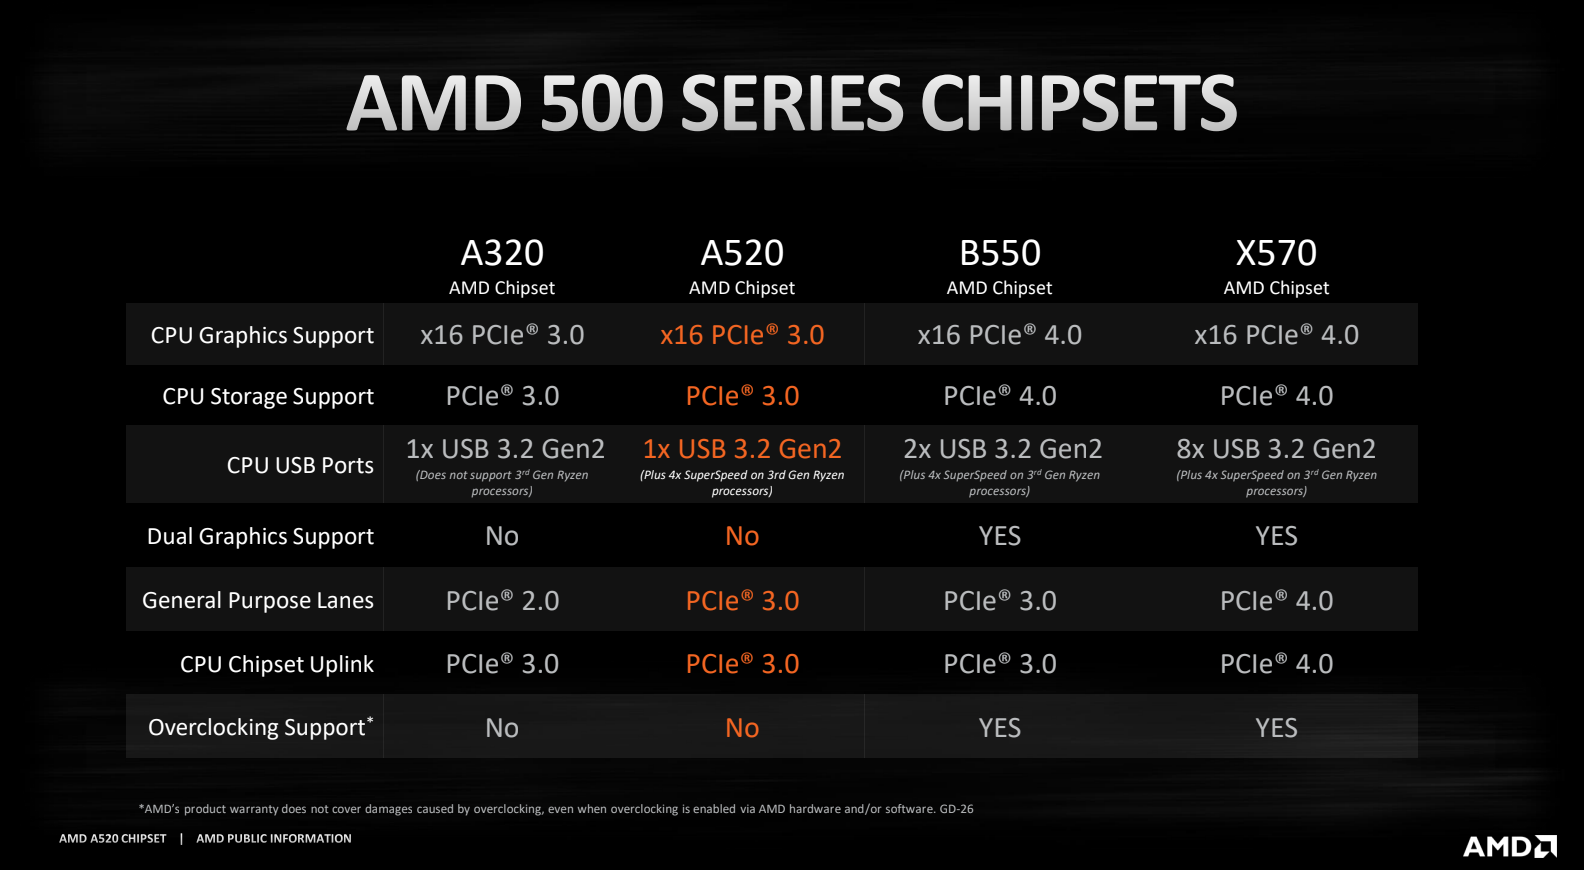 AMD 500 Series Chipset comparison